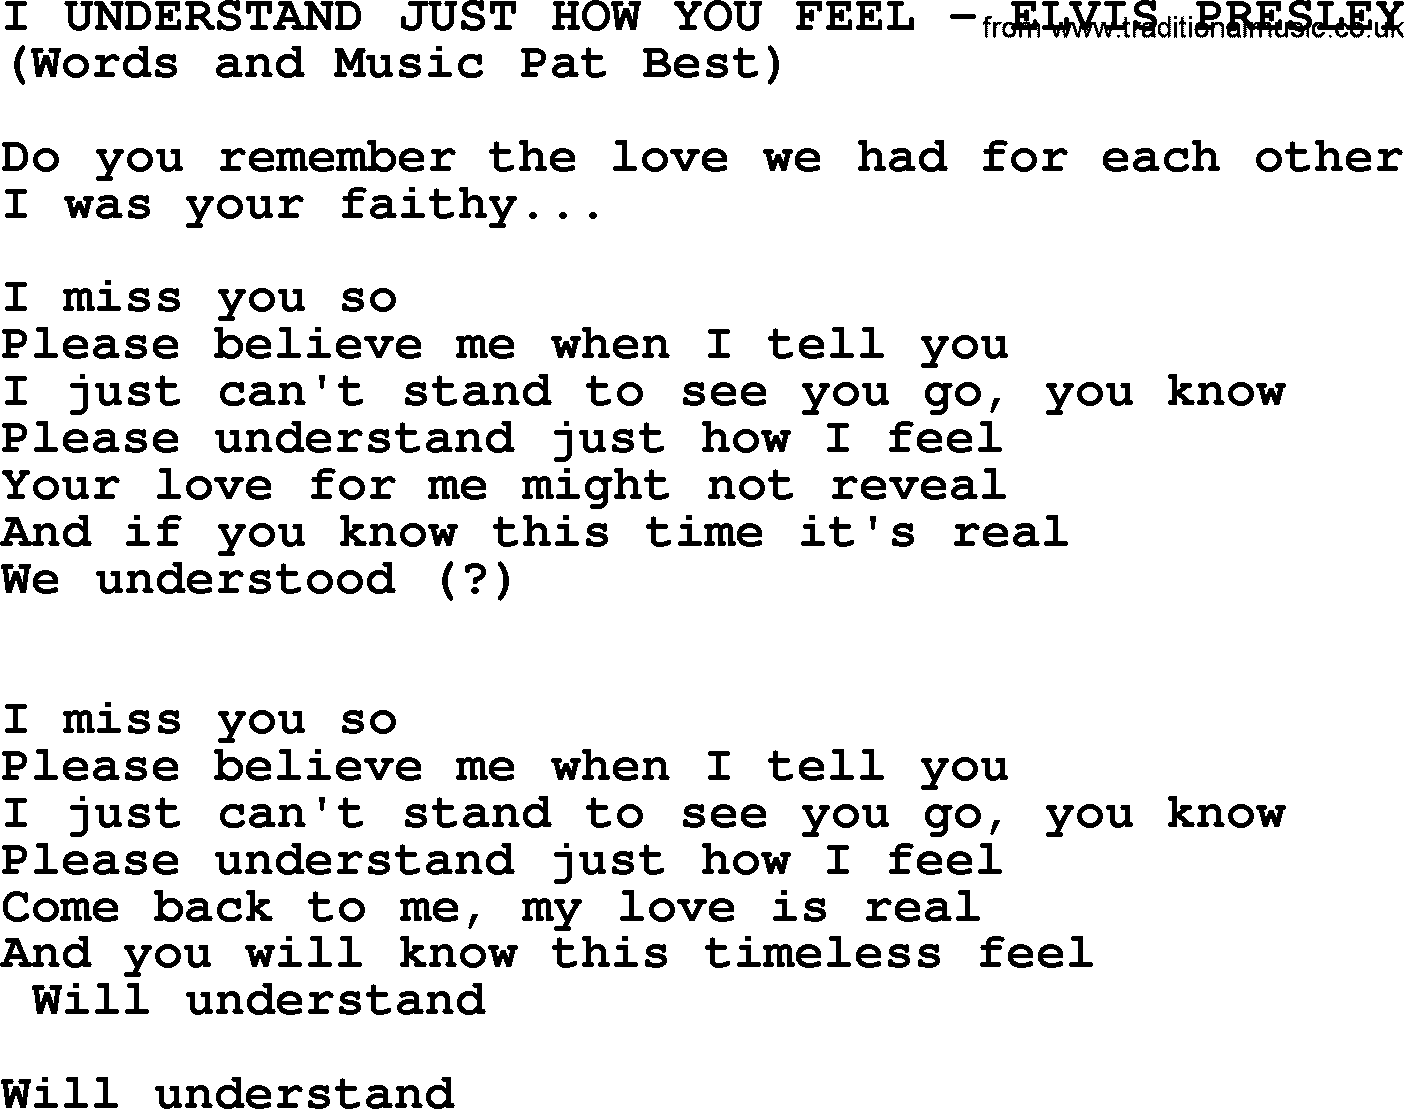 Elvis Presley song: I Understand Just How You Feel lyrics